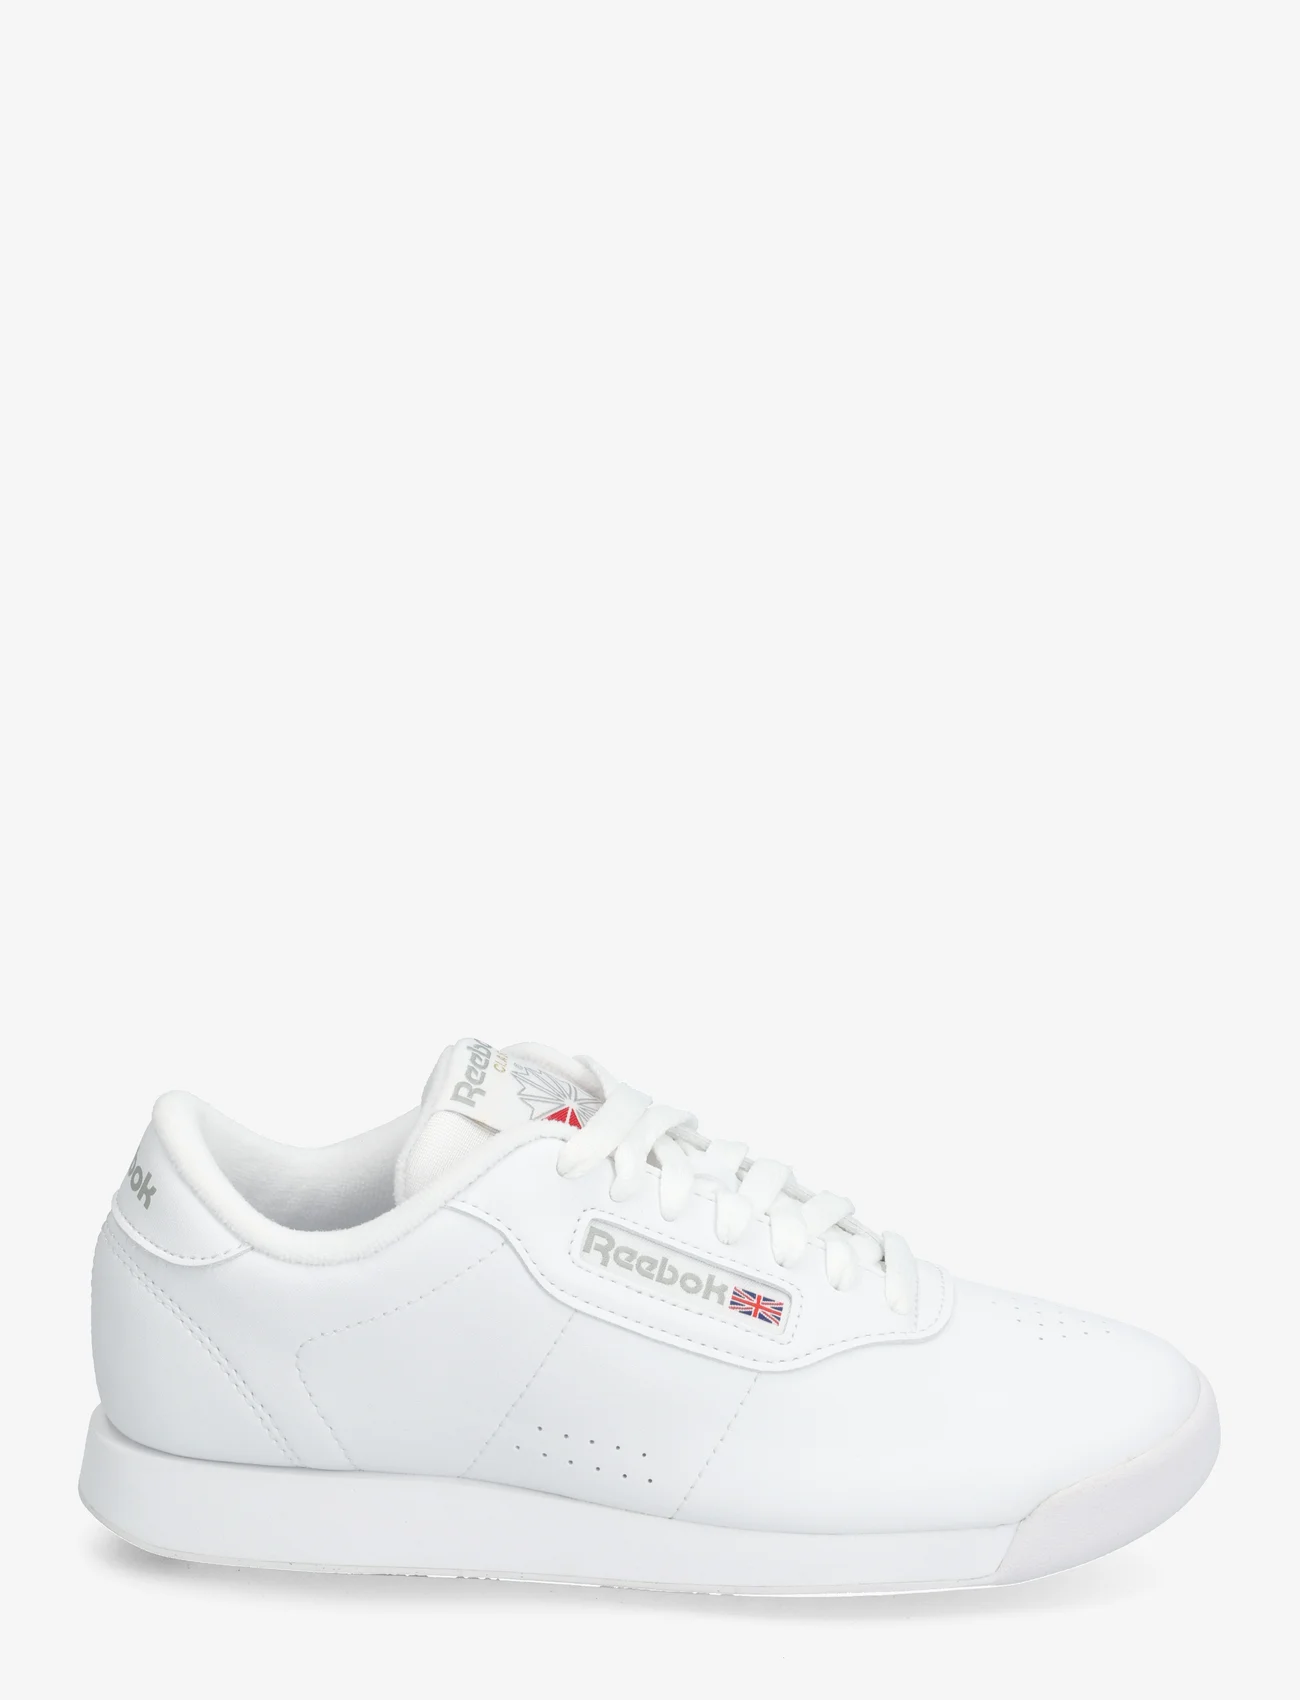 Reebok Classics - PRINCESS - low top sneakers - us-white - 1